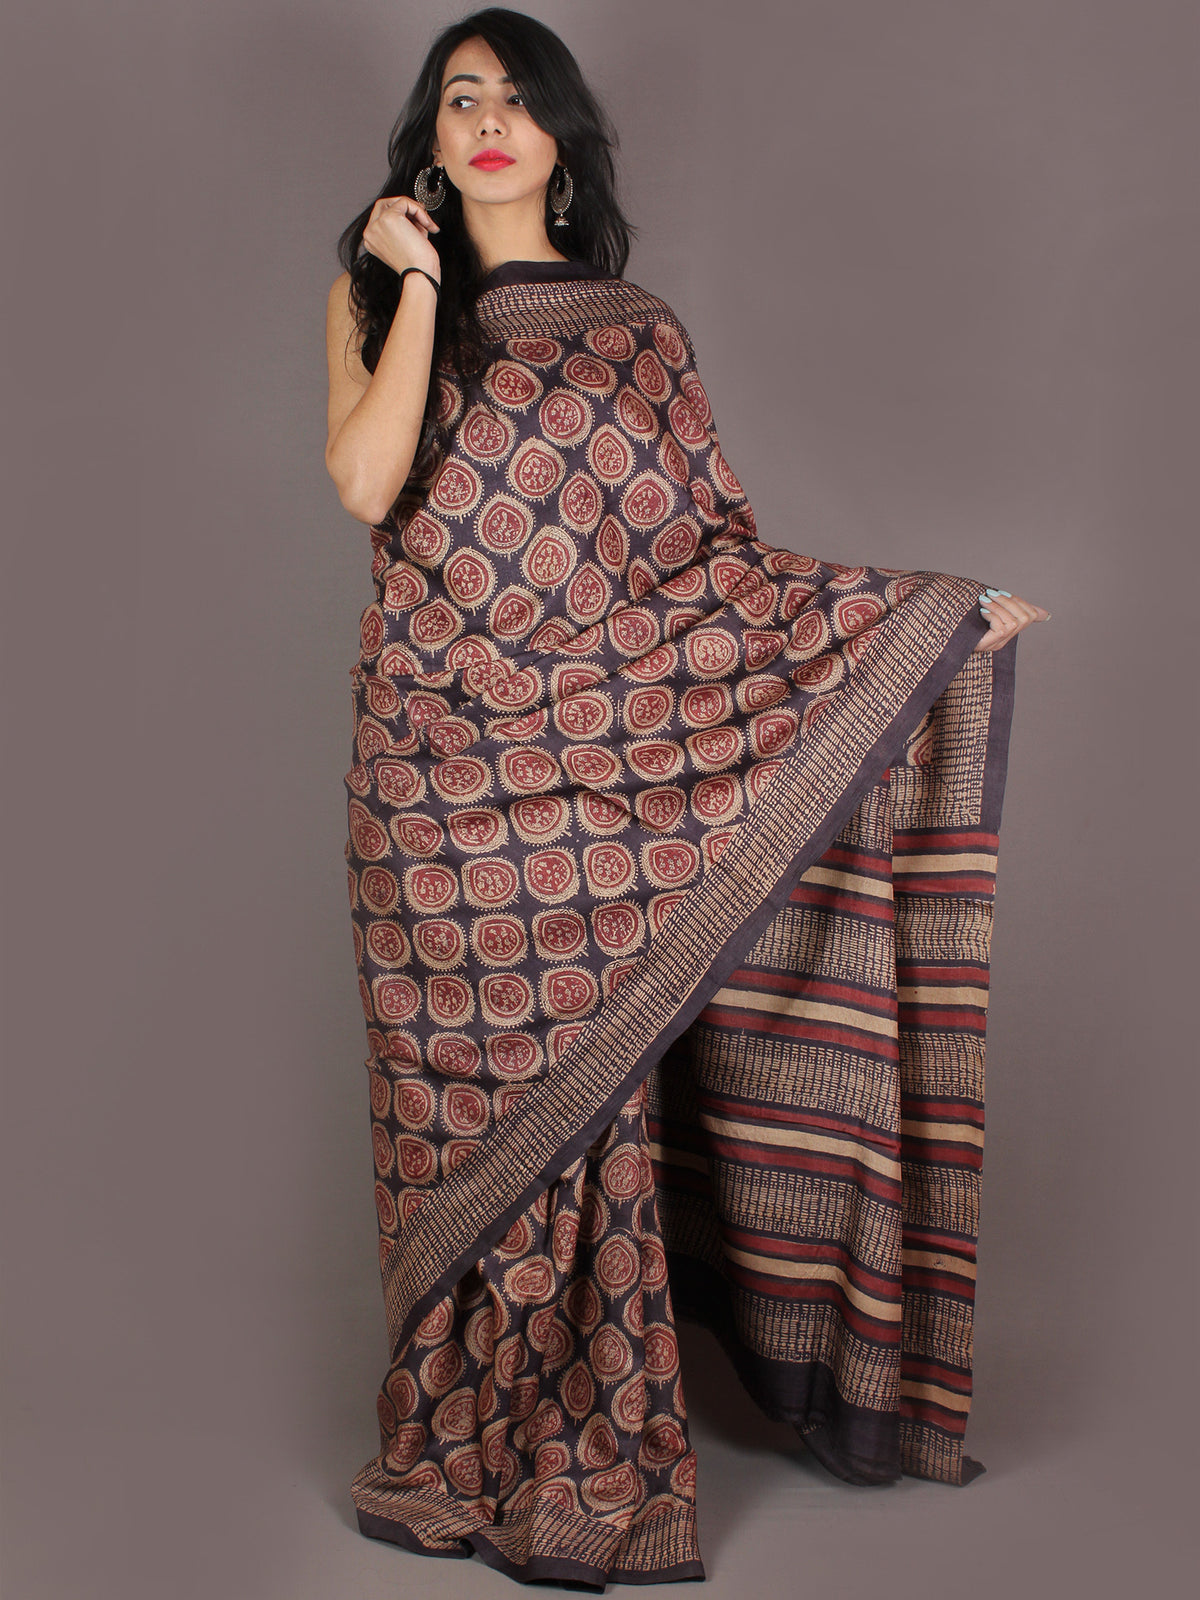 Tussar Handloom Silk Hand Block Printed Saree in Purple Maroon & Beige- S03170956